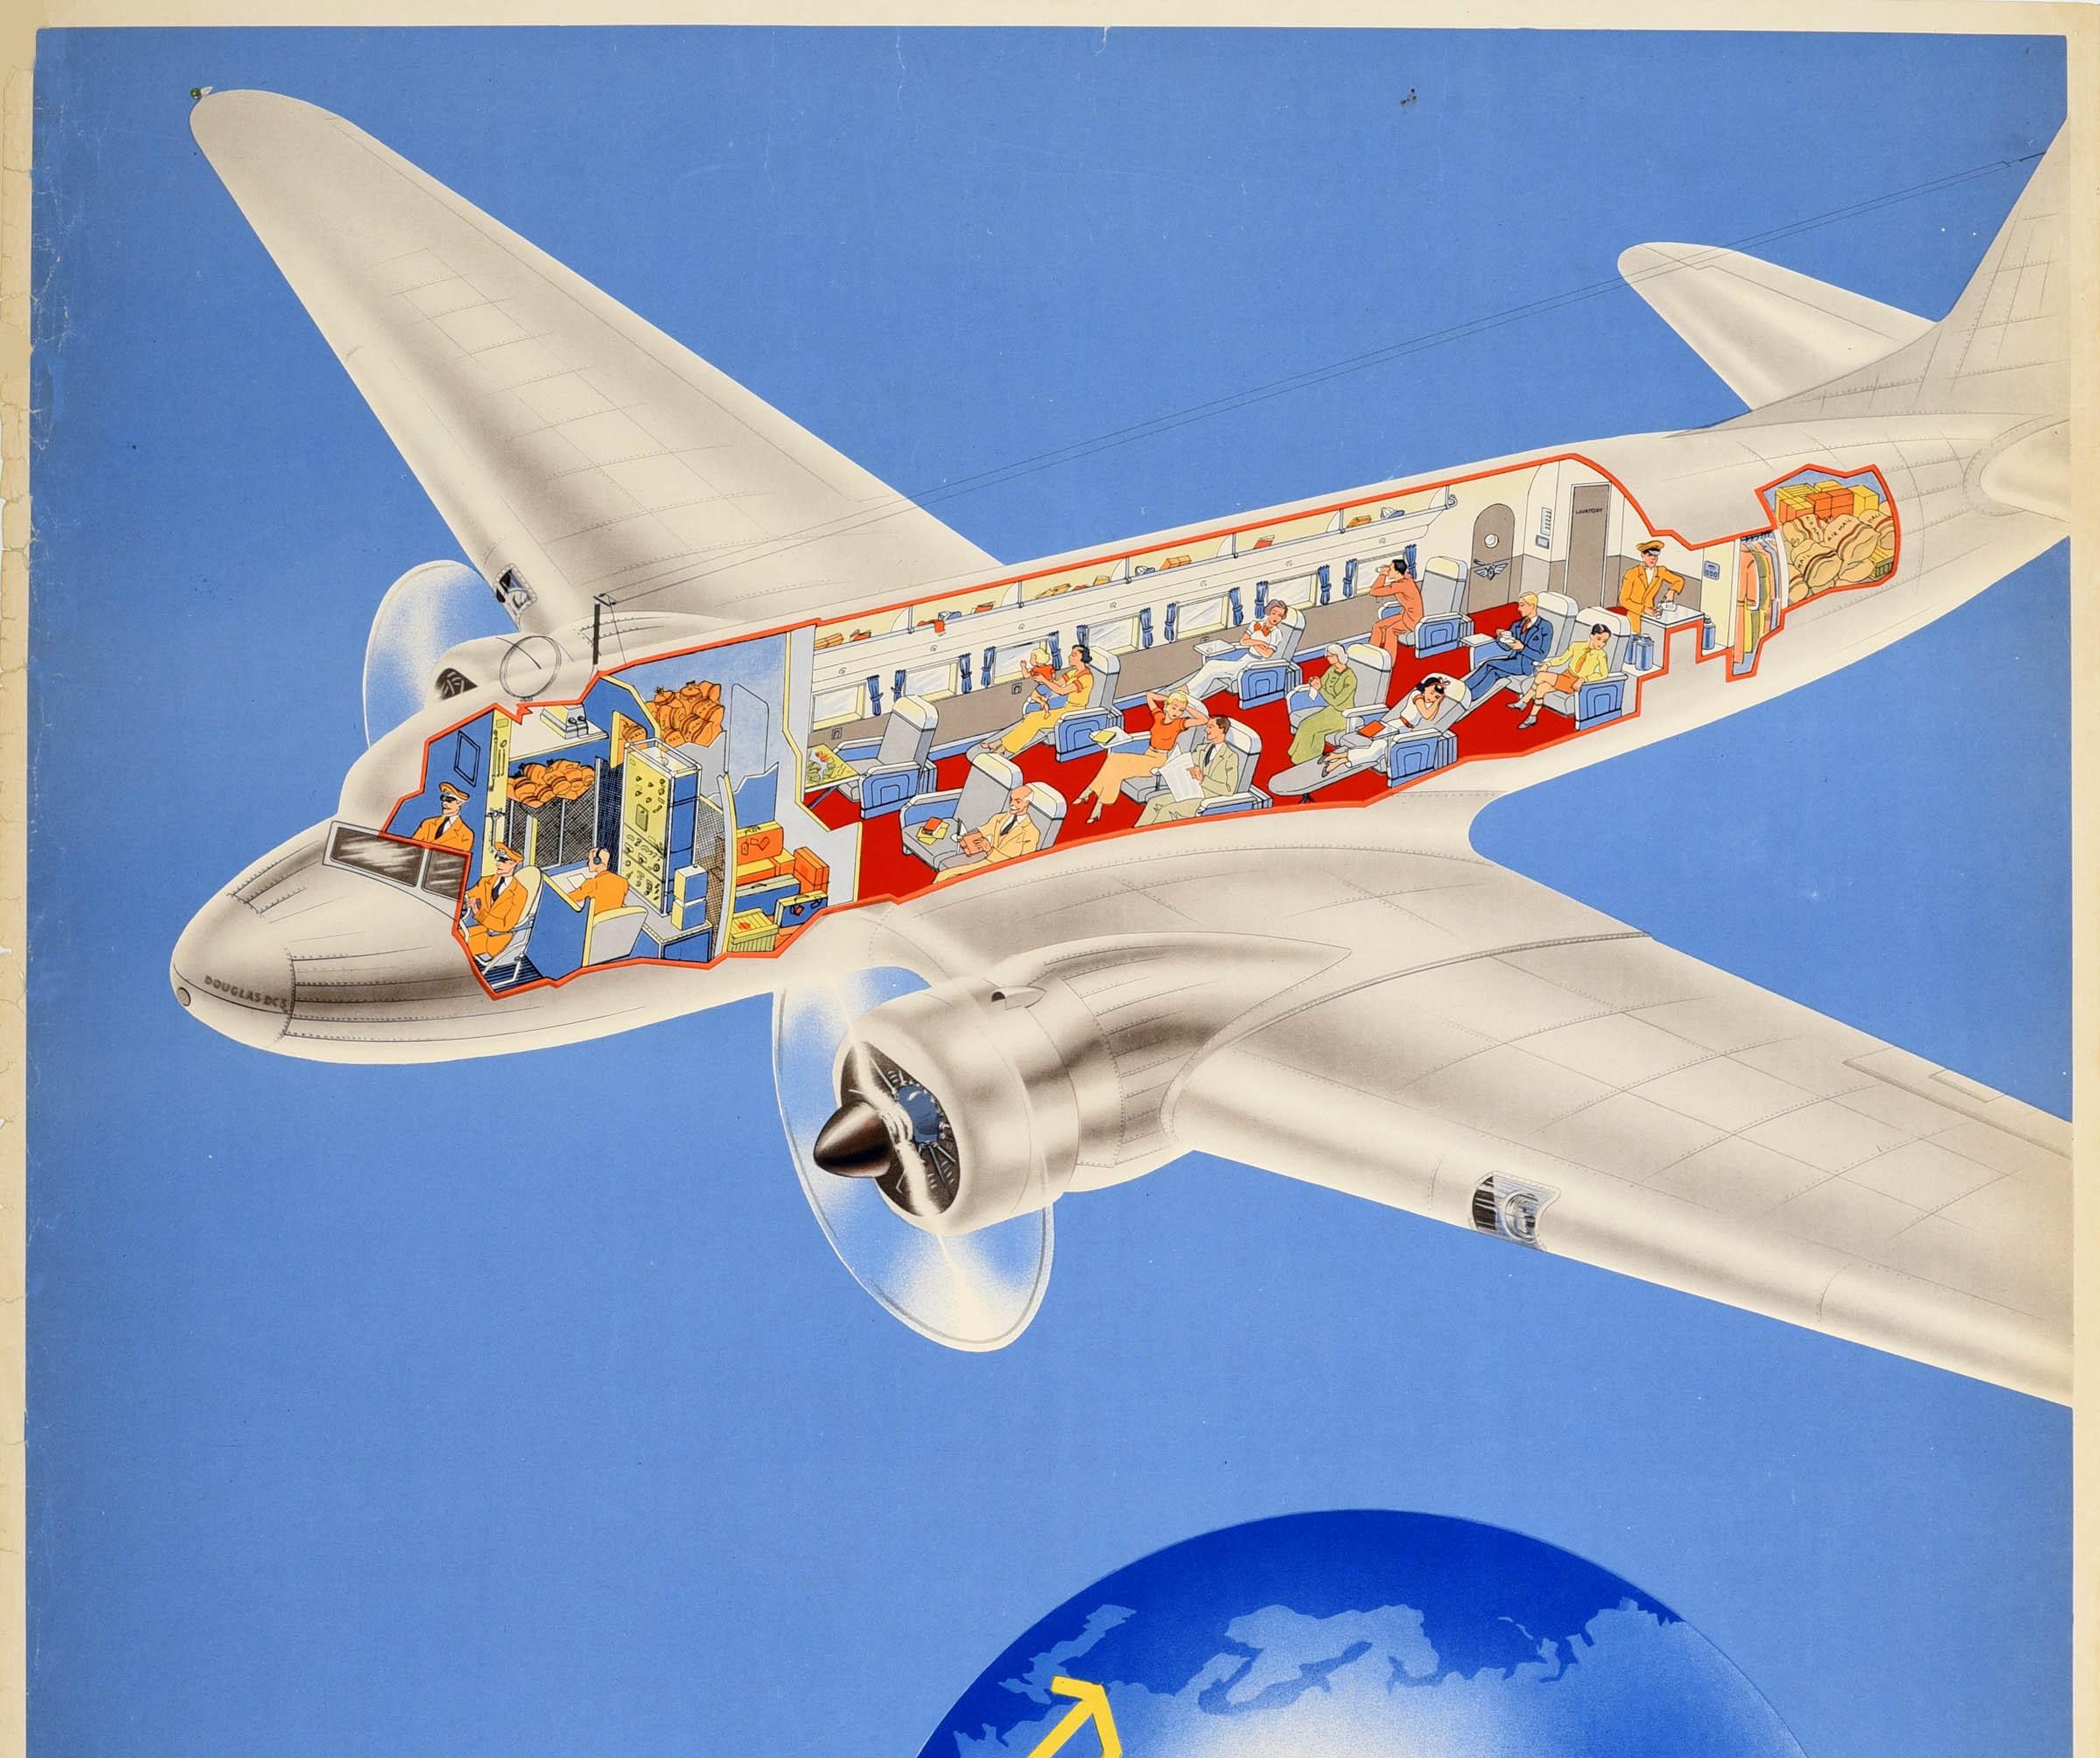 Original Vintage Poster KLM Royal Dutch Air Lines Amsterdam Batavia Douglas DC-3 - Print by Paul Erkelens